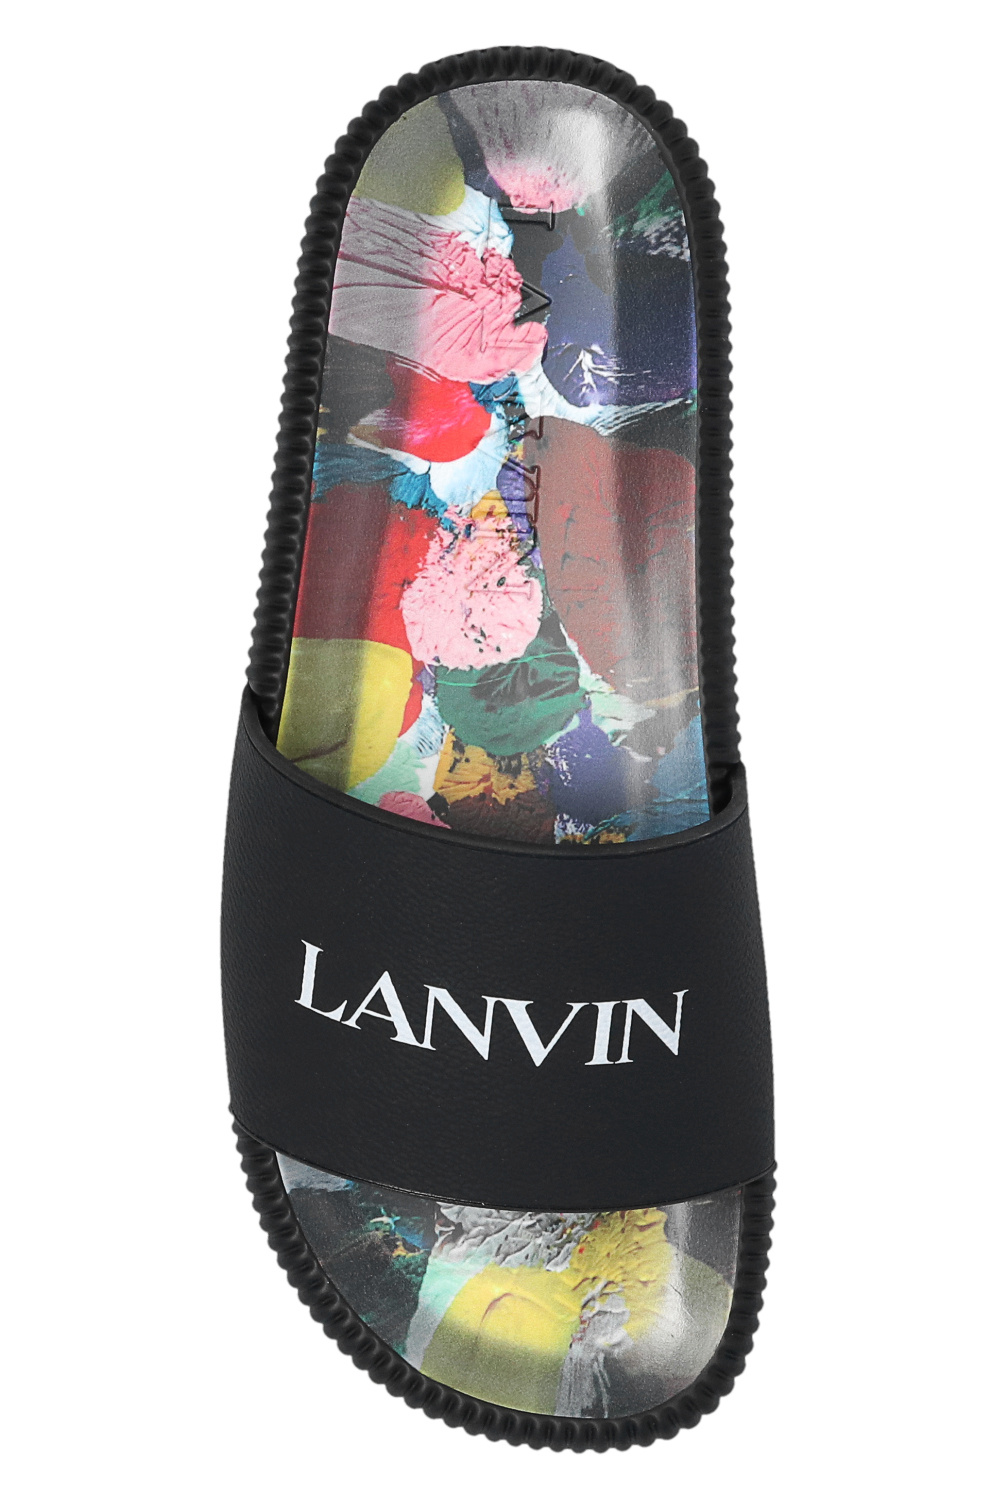 Lanvin Lanvin Best Breathable Indoor Spin Shoes